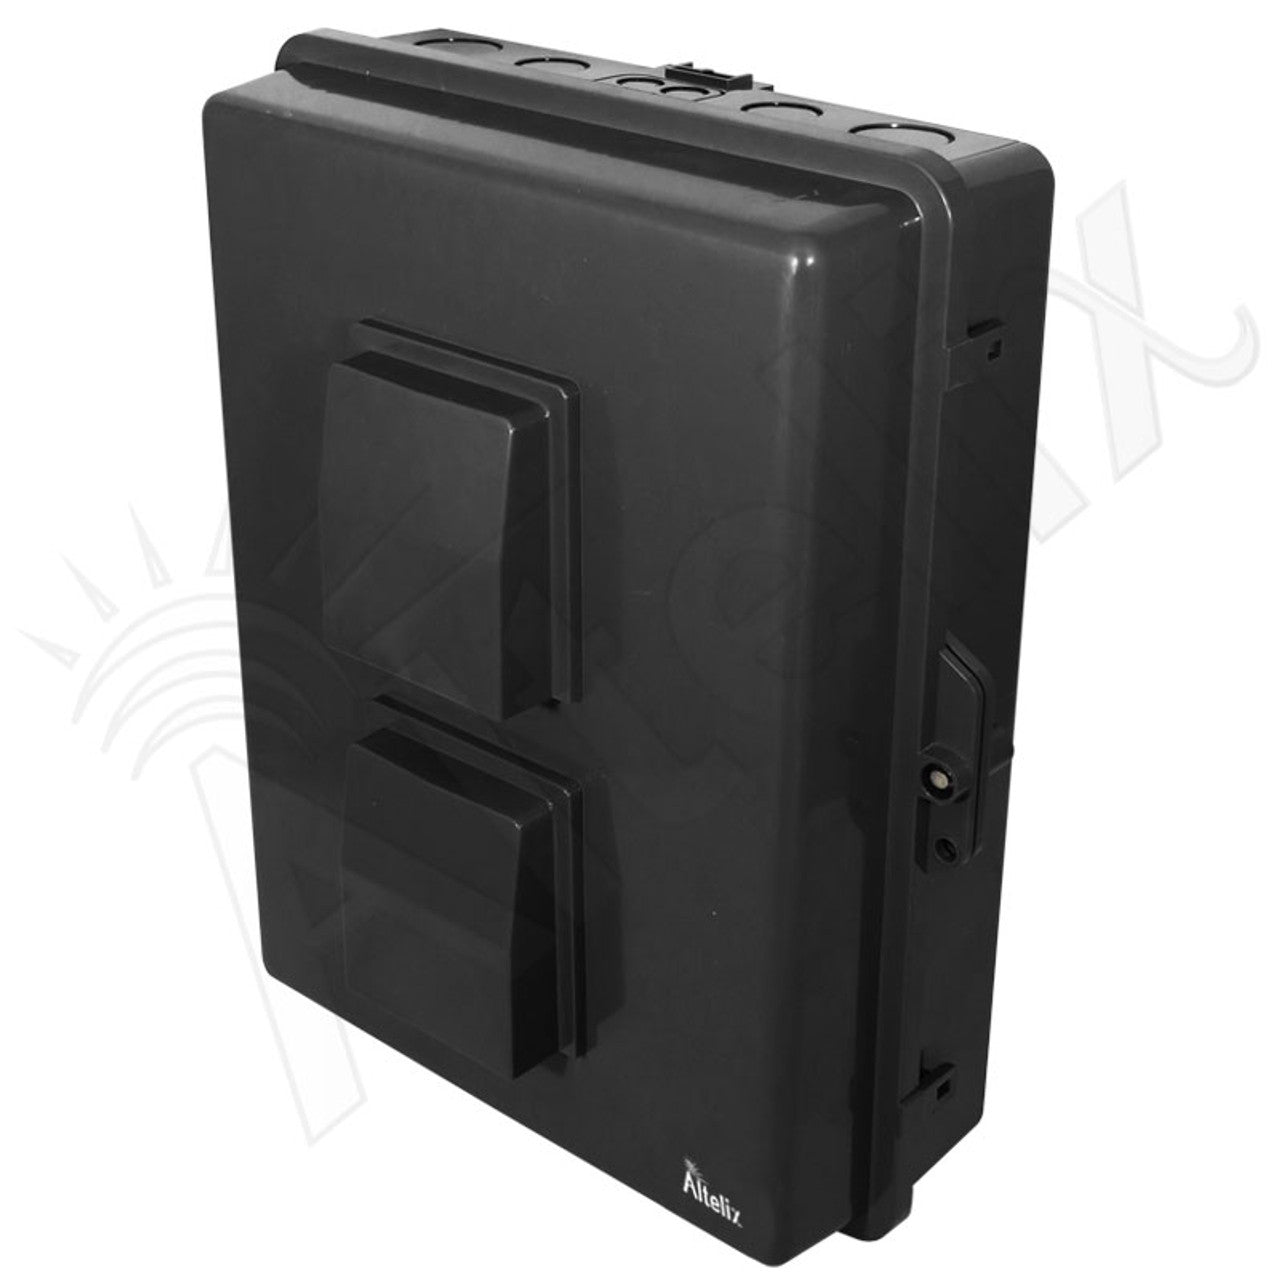 Buy black Altelix 17x14x6 PC + ABS Weatherproof Vented Utility Box NEMA Enclosure with Heavy Duty Pole Mount Kit